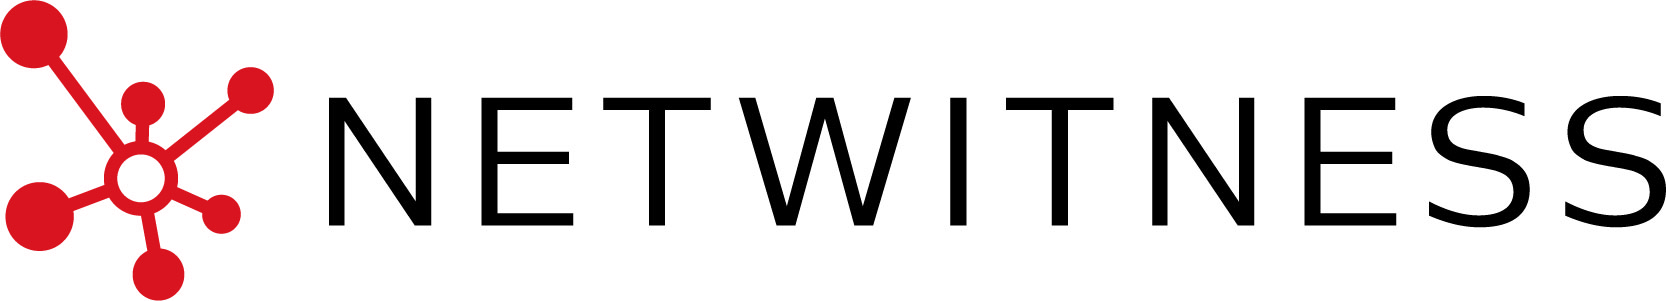 netwitness-logo-CMYK.jpg